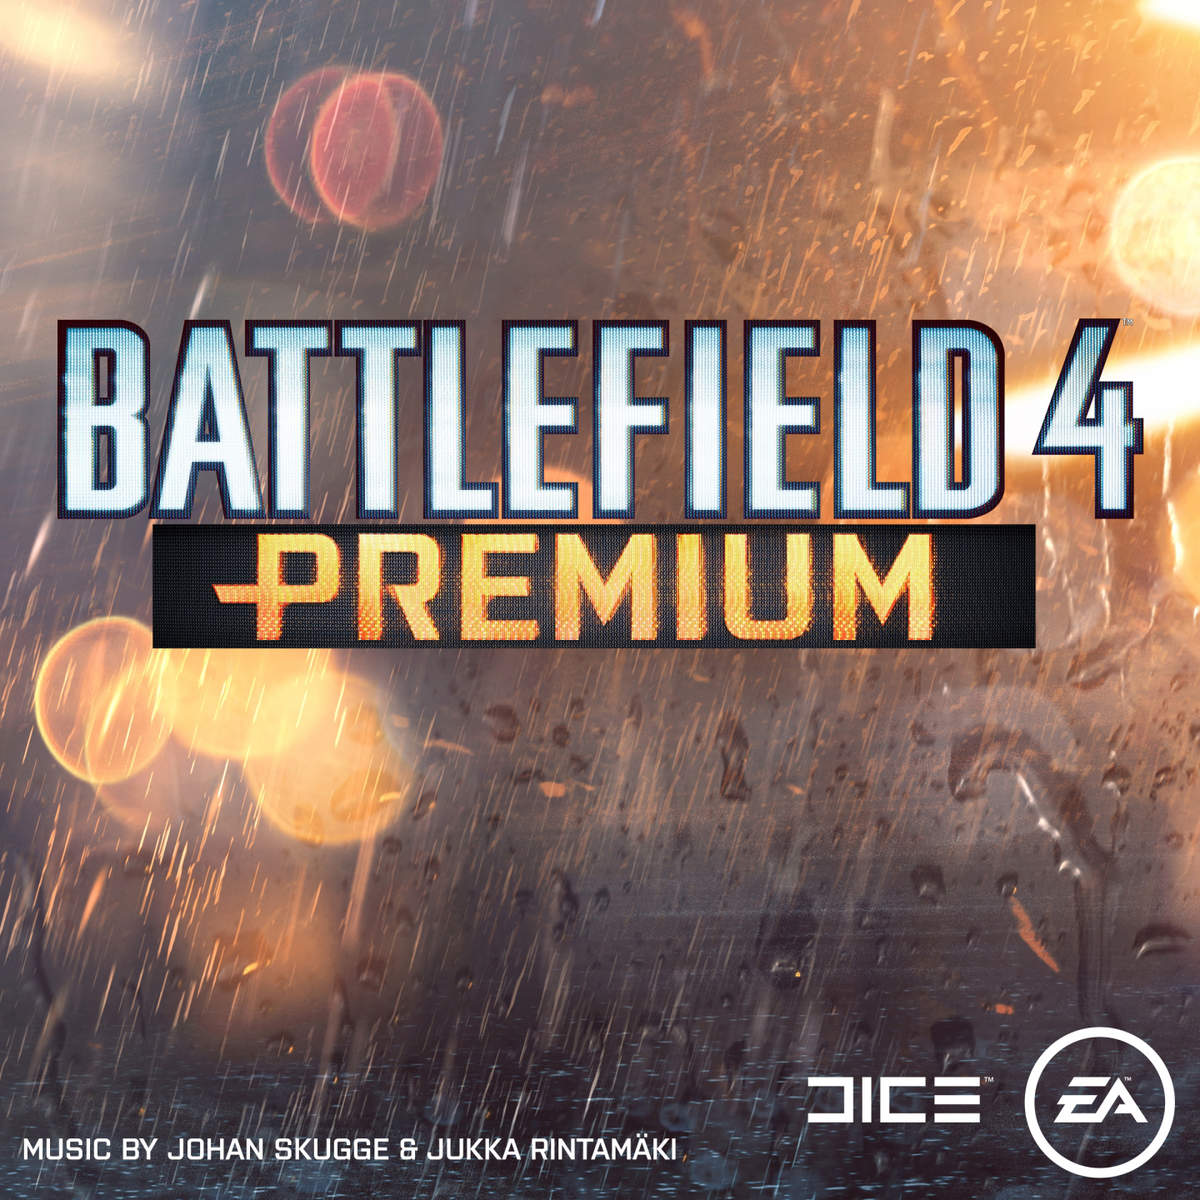 Battlefield 4 Premium (2015) MP3 - Download Battlefield 4 Premium (2015)  Soundtracks for FREE!